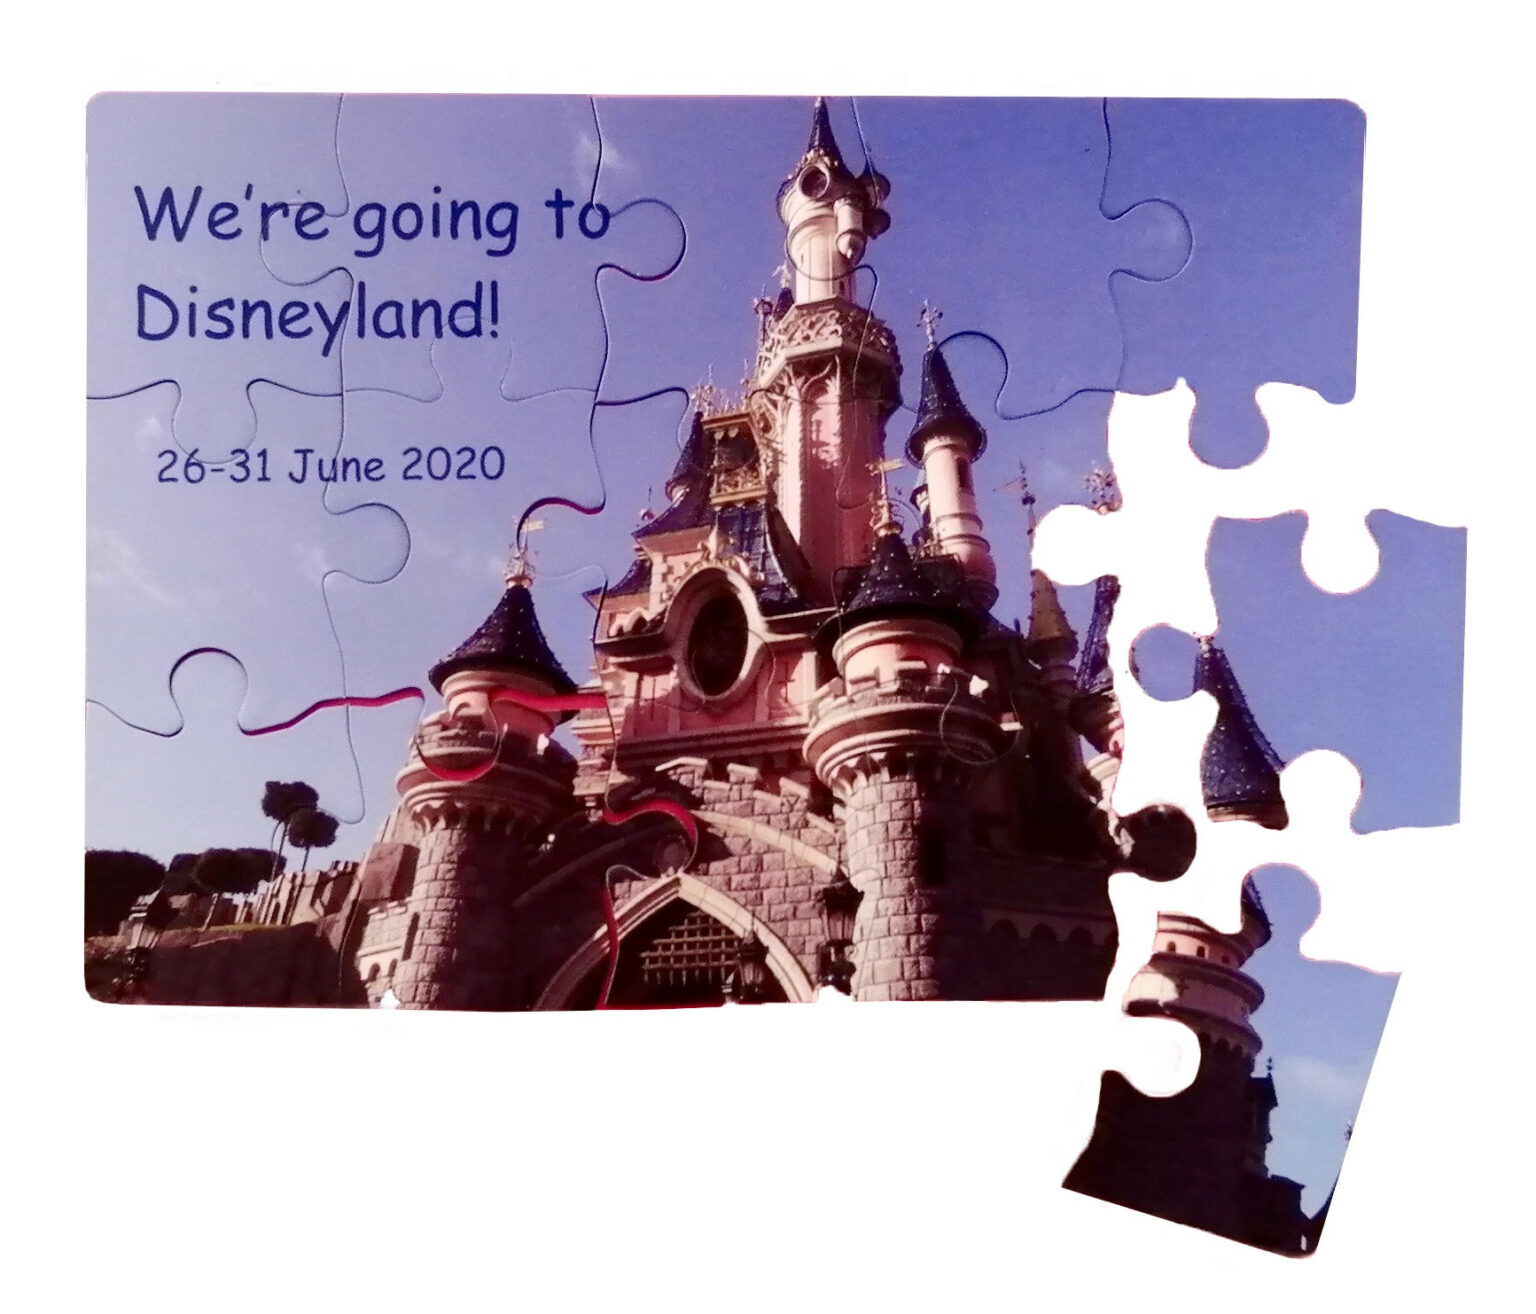 Disneyland holiday invitation